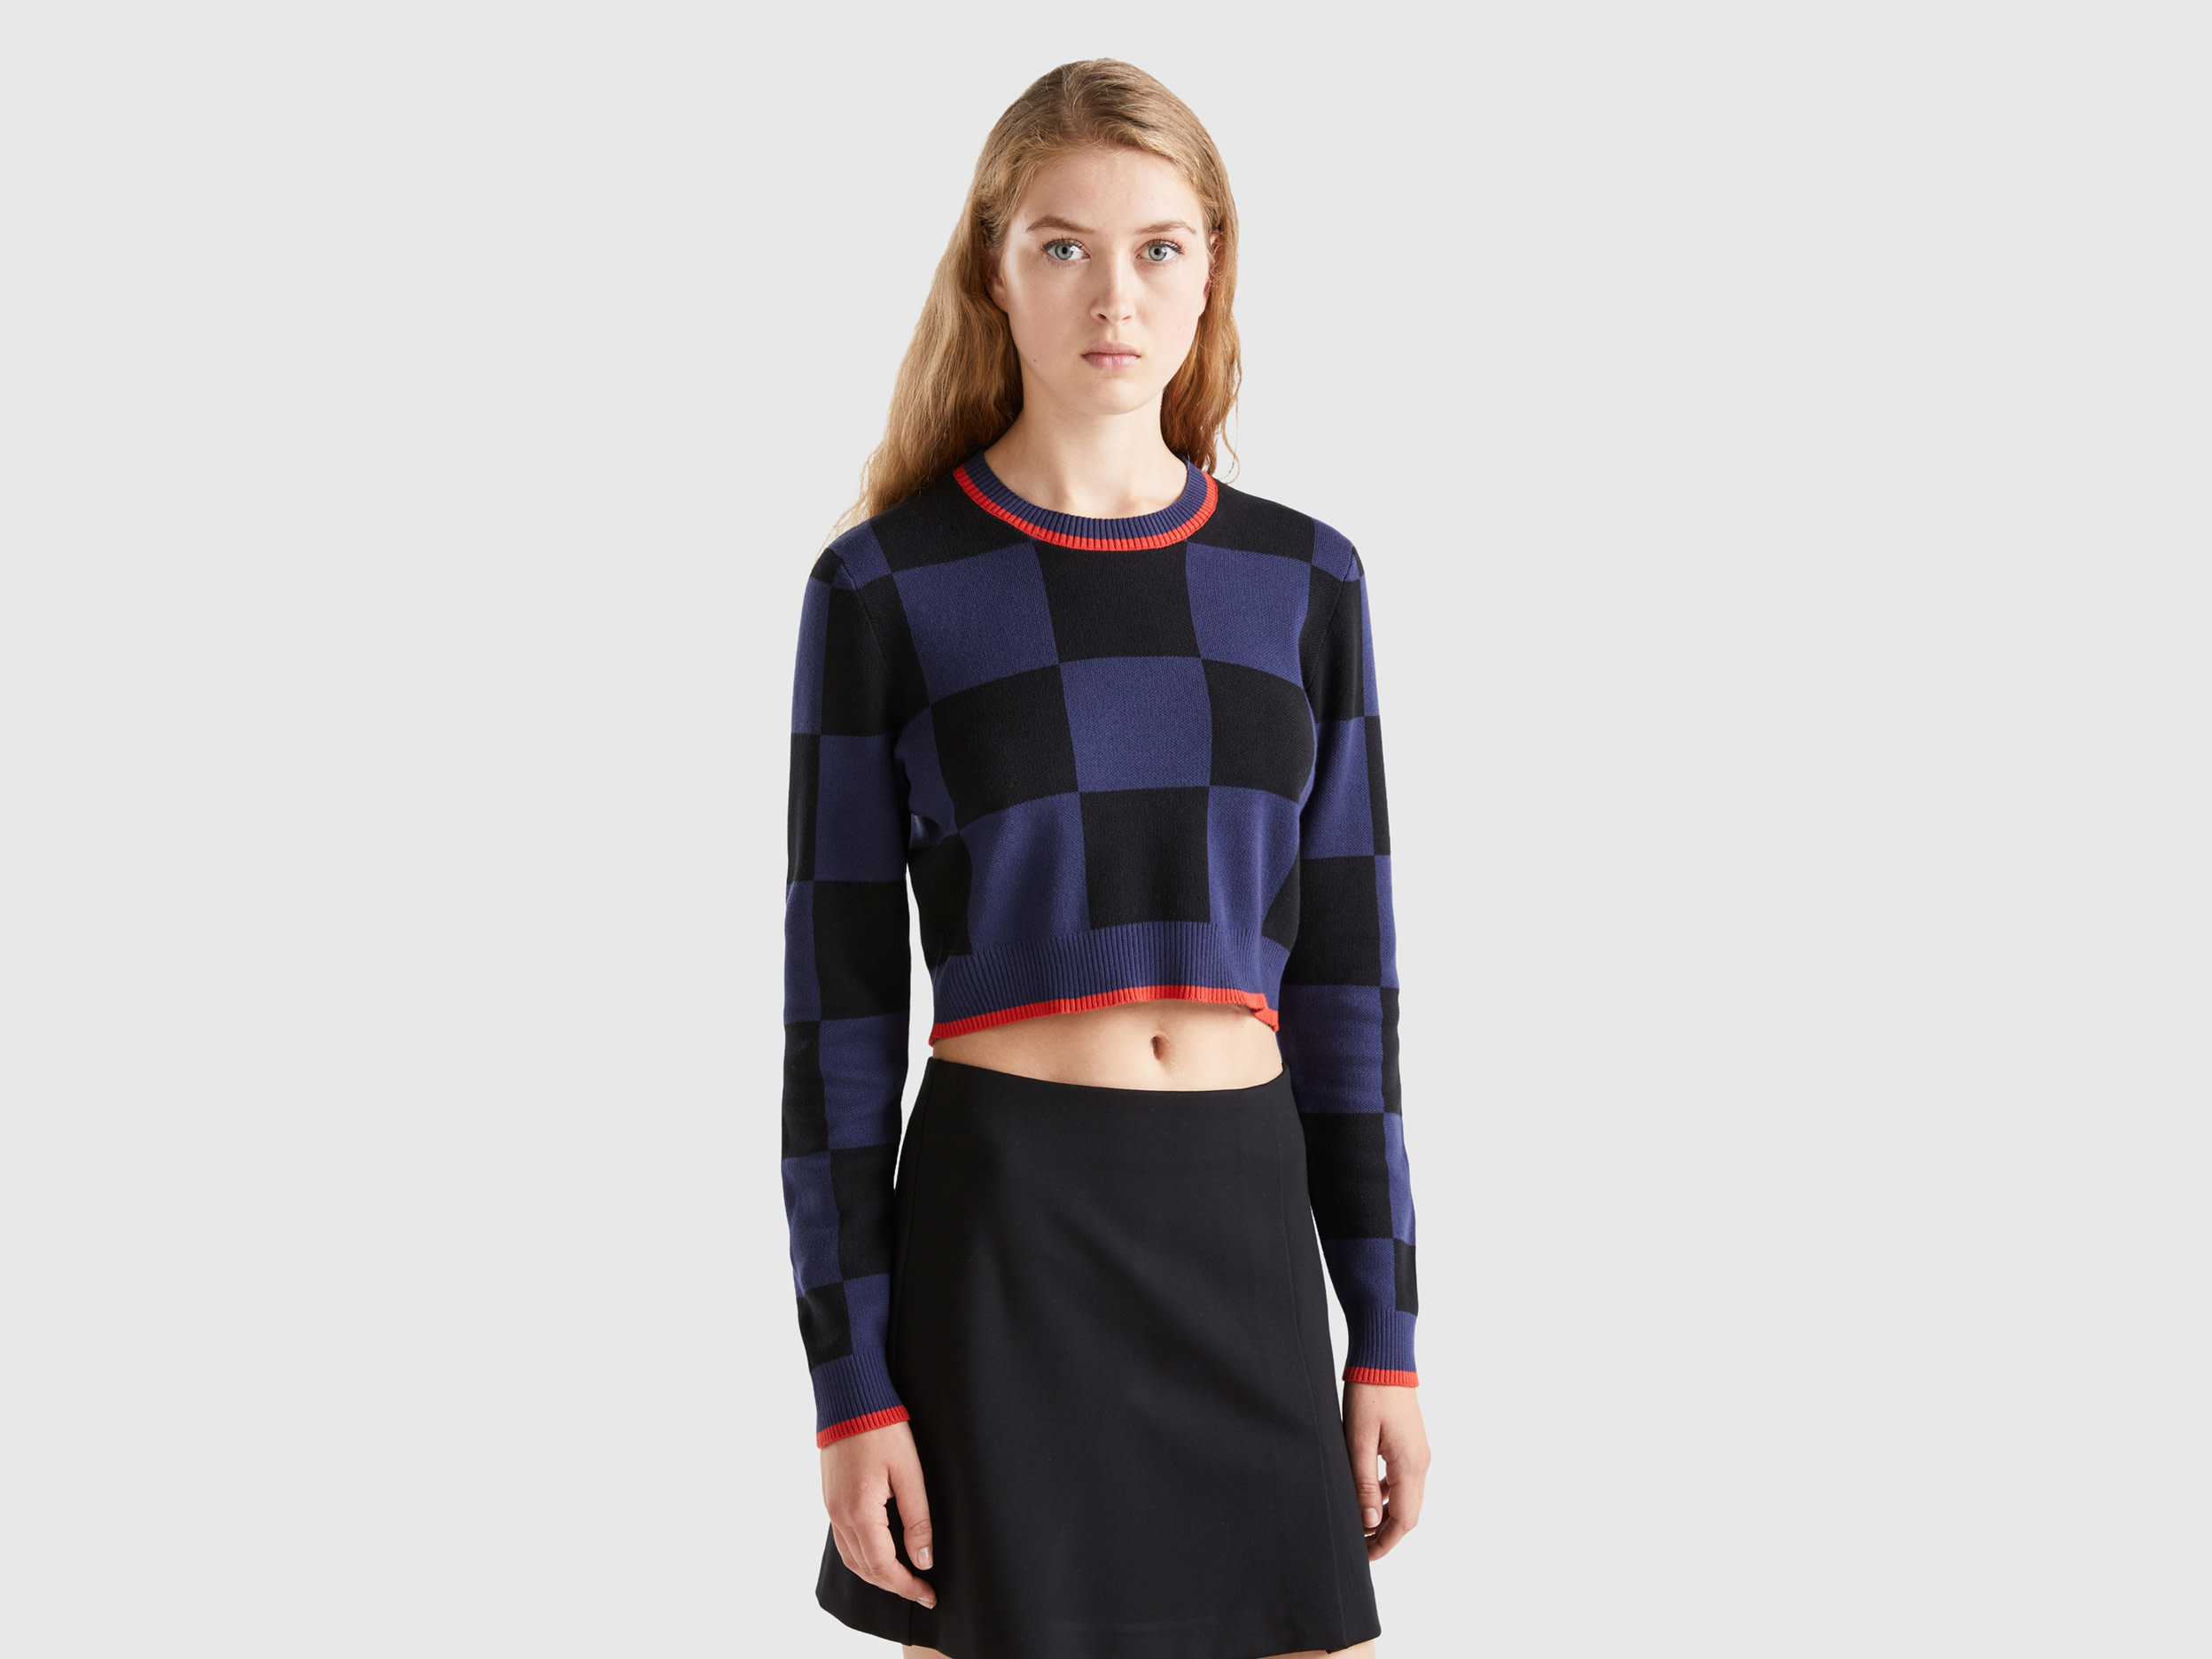 Benetton, Cropped Checkered Sweater, size M, Dark Blue, Women